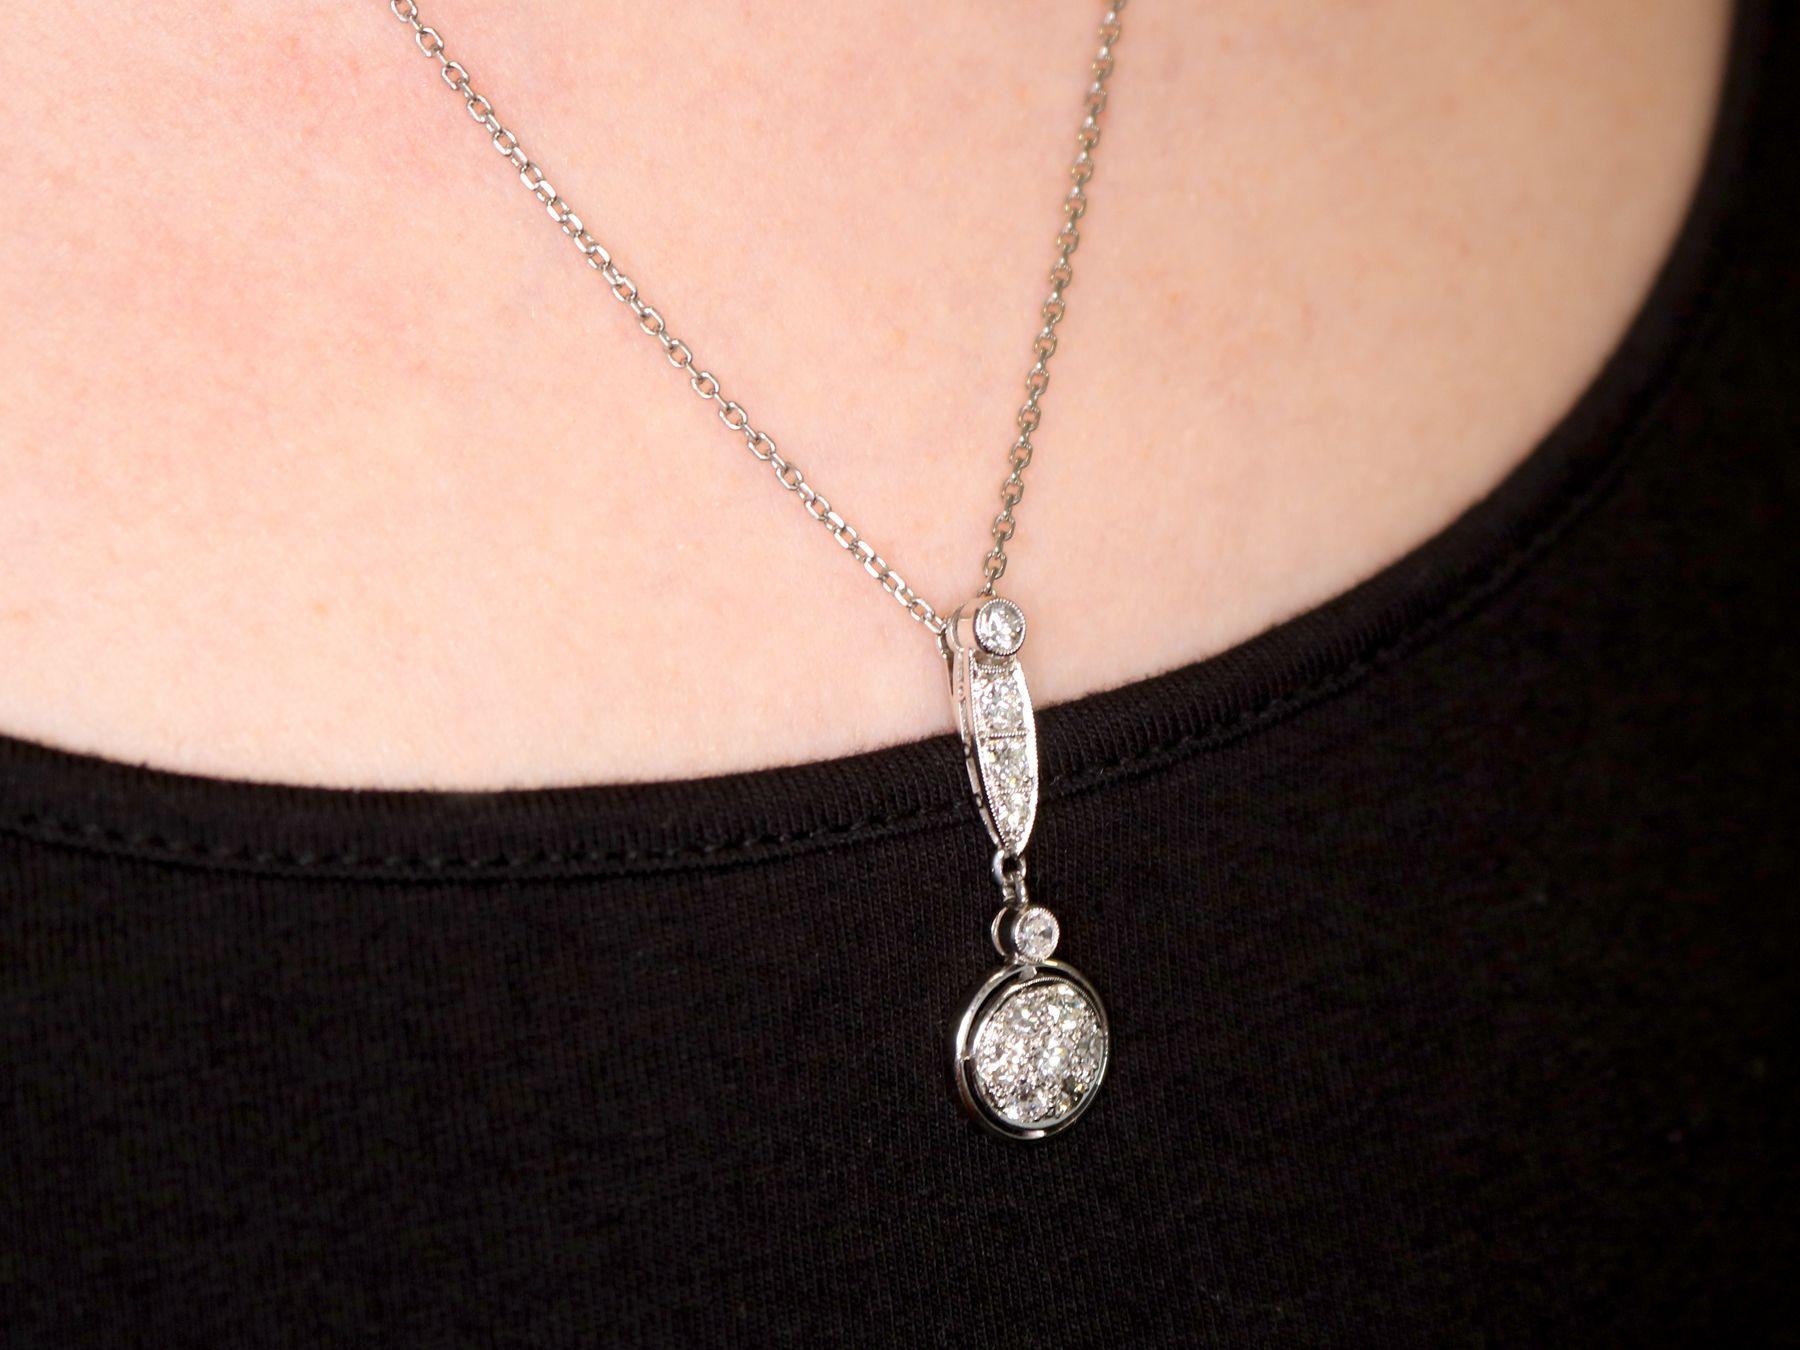 Antique 1.12 Carat Diamond and Platinum Necklace For Sale 2